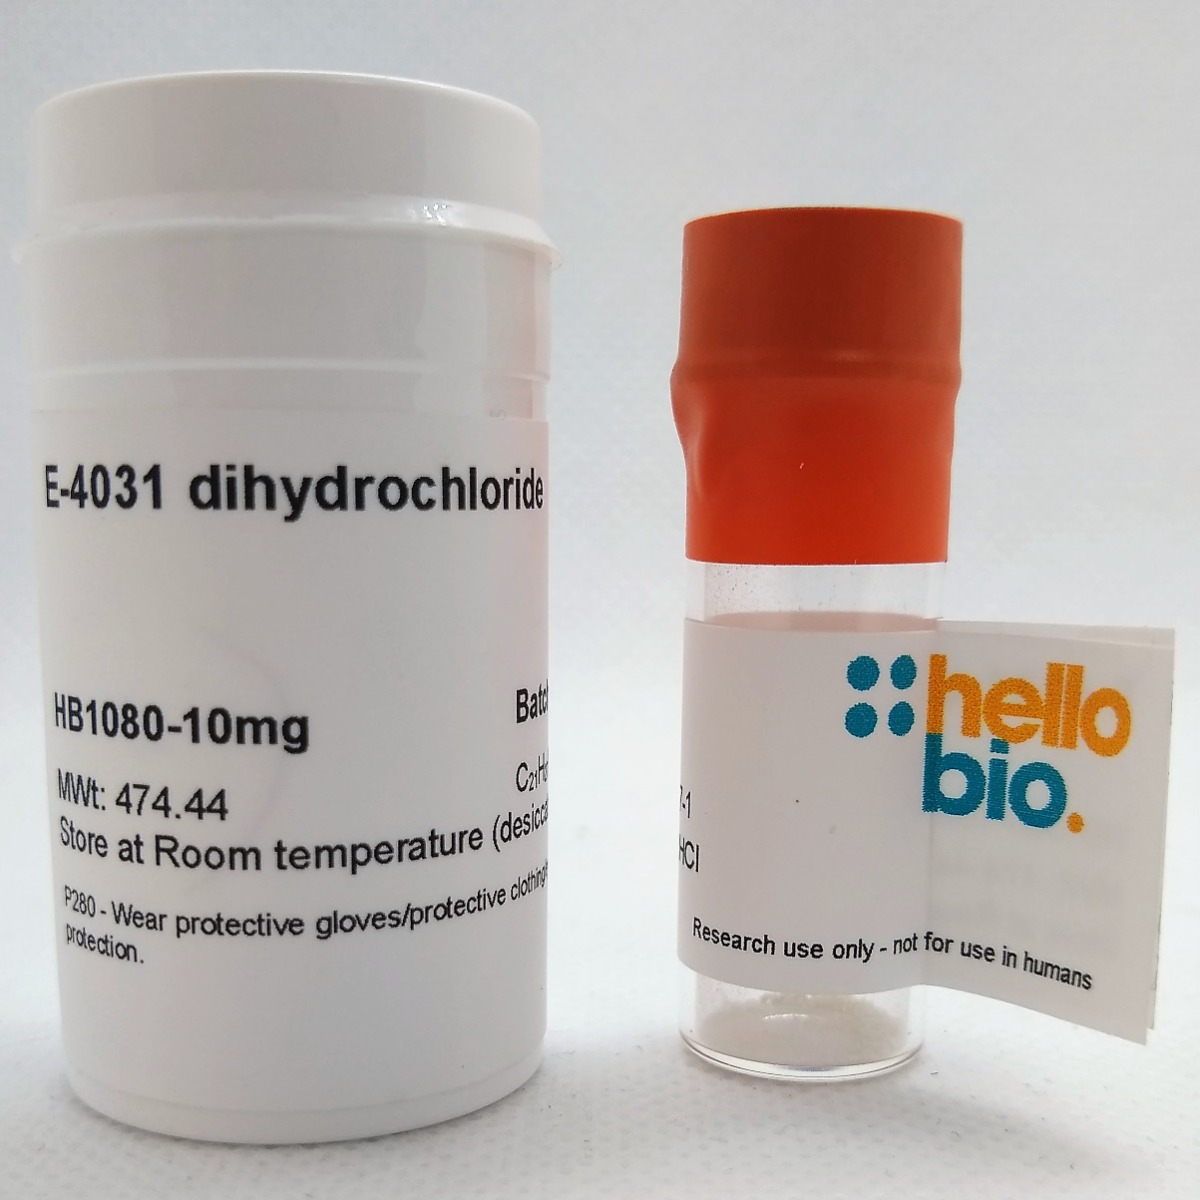 E-4031 dihydrochloride product vial image | Hello Bio